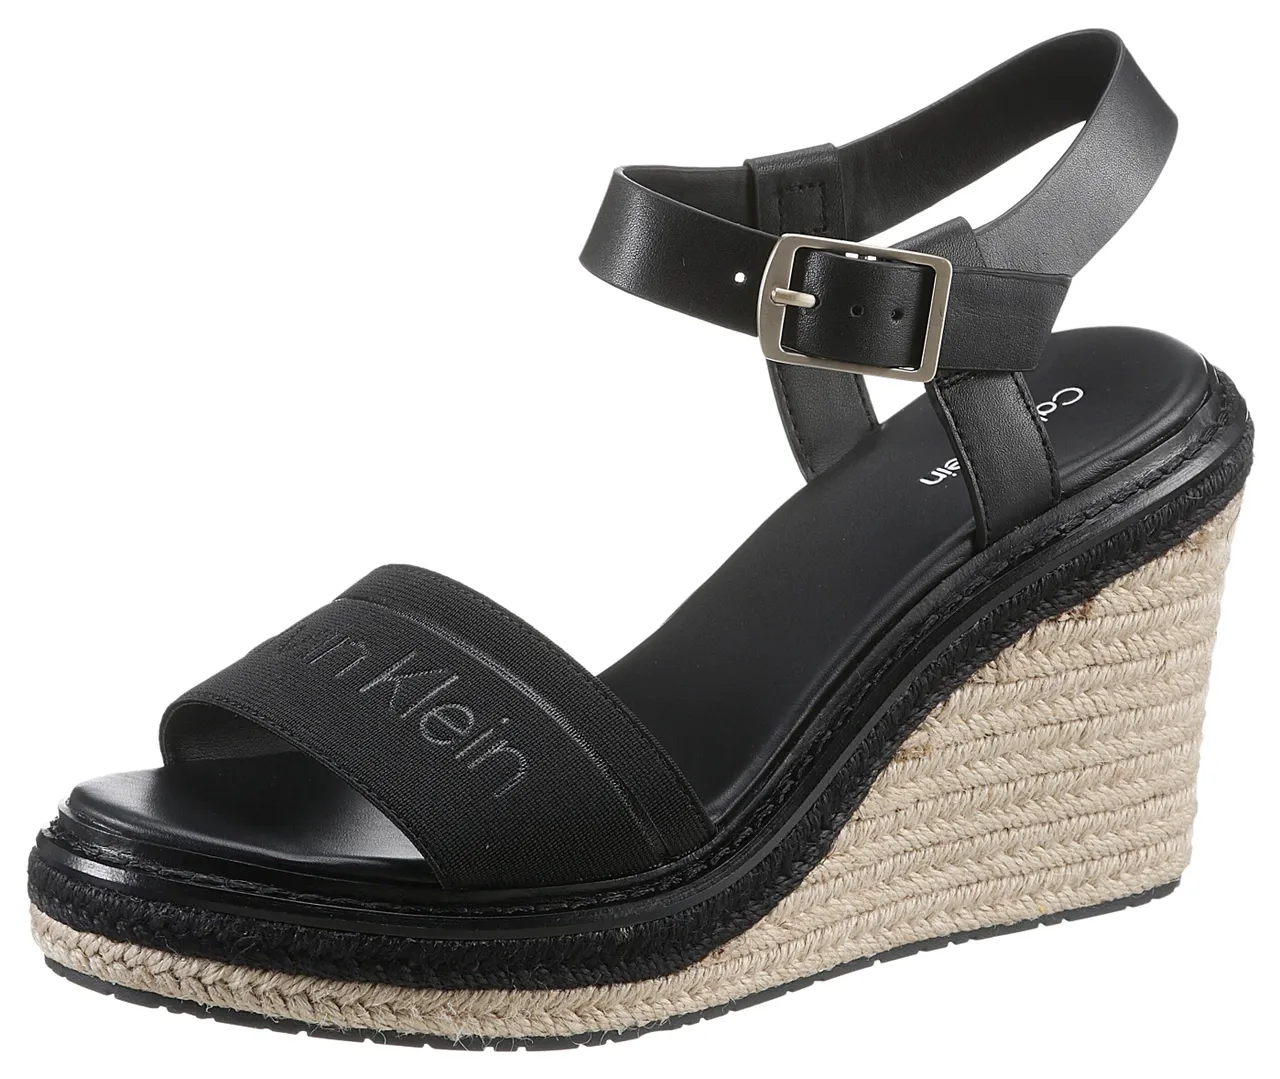 Sandalette CALVIN KLEIN "WIRA 5C *I" Gr. 39, schwarz Damen Schuhe Sandaletten mit Bast bezogenem Keilabsatz